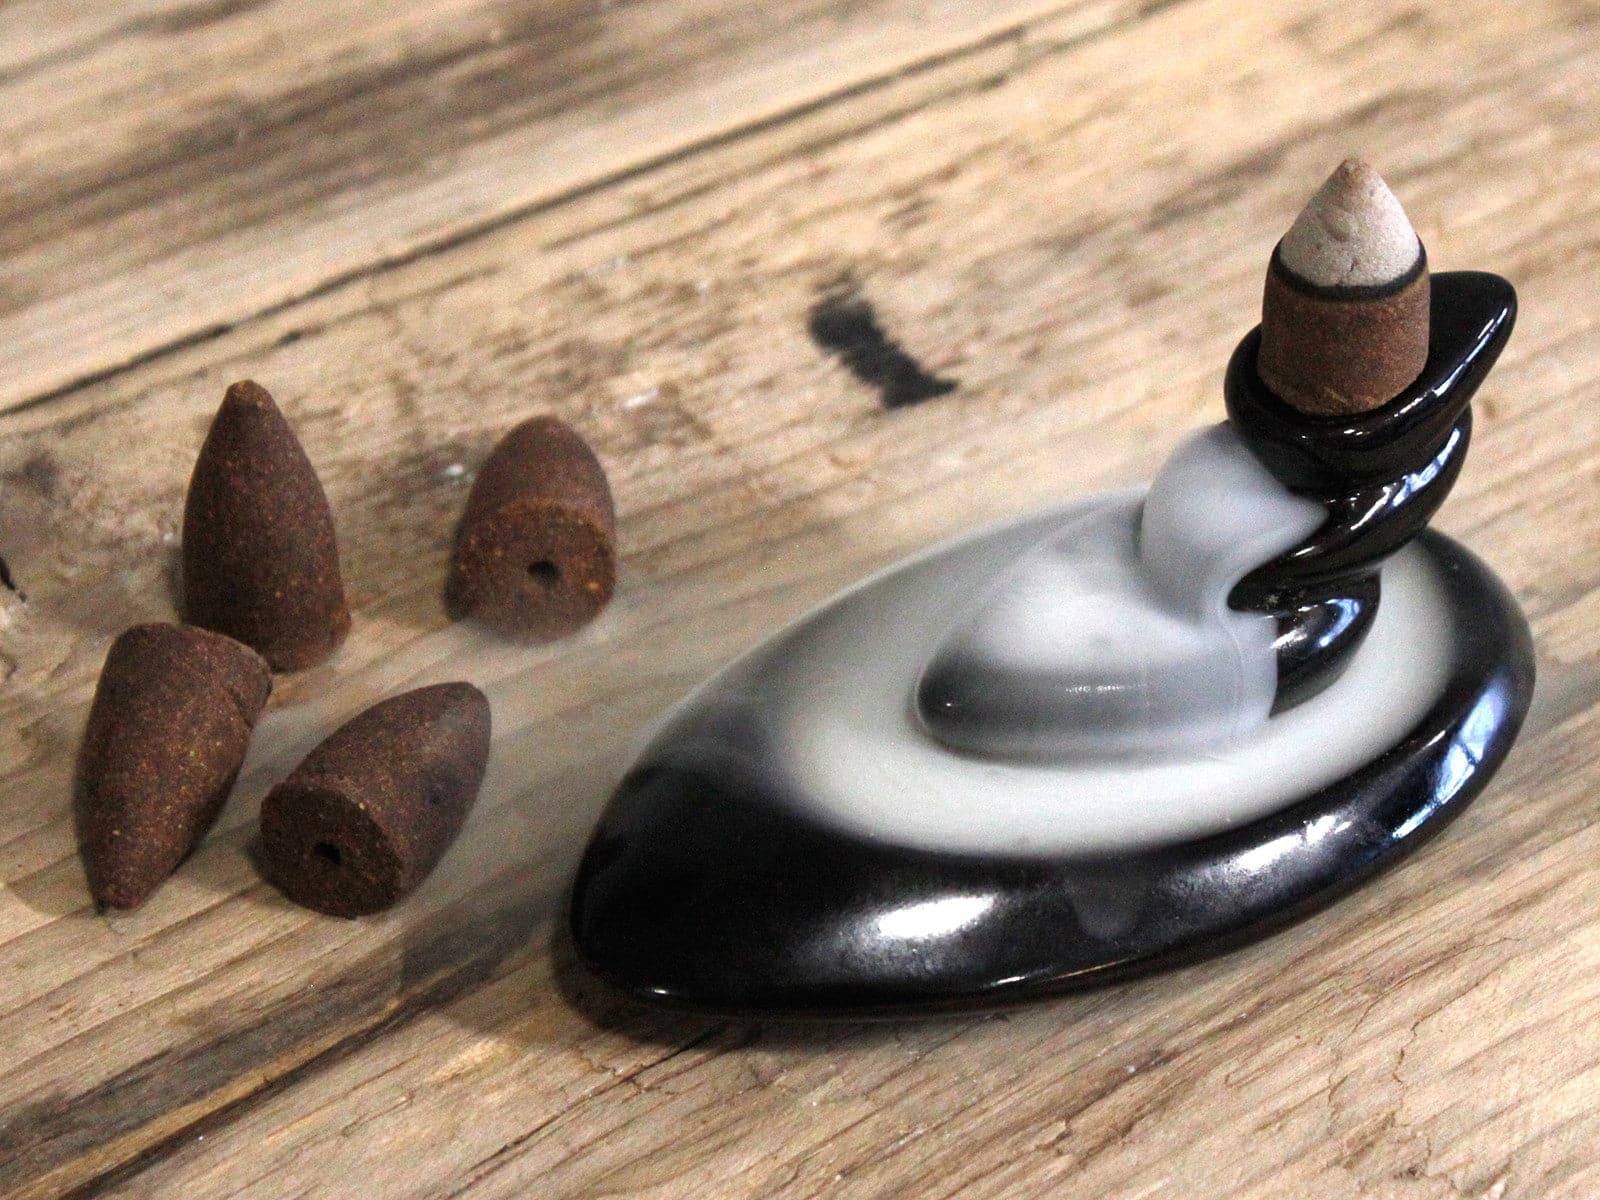 Aromatica Backflow Incense Cones - 7 Charkras - best price from Maltashopper.com AROMABF-03